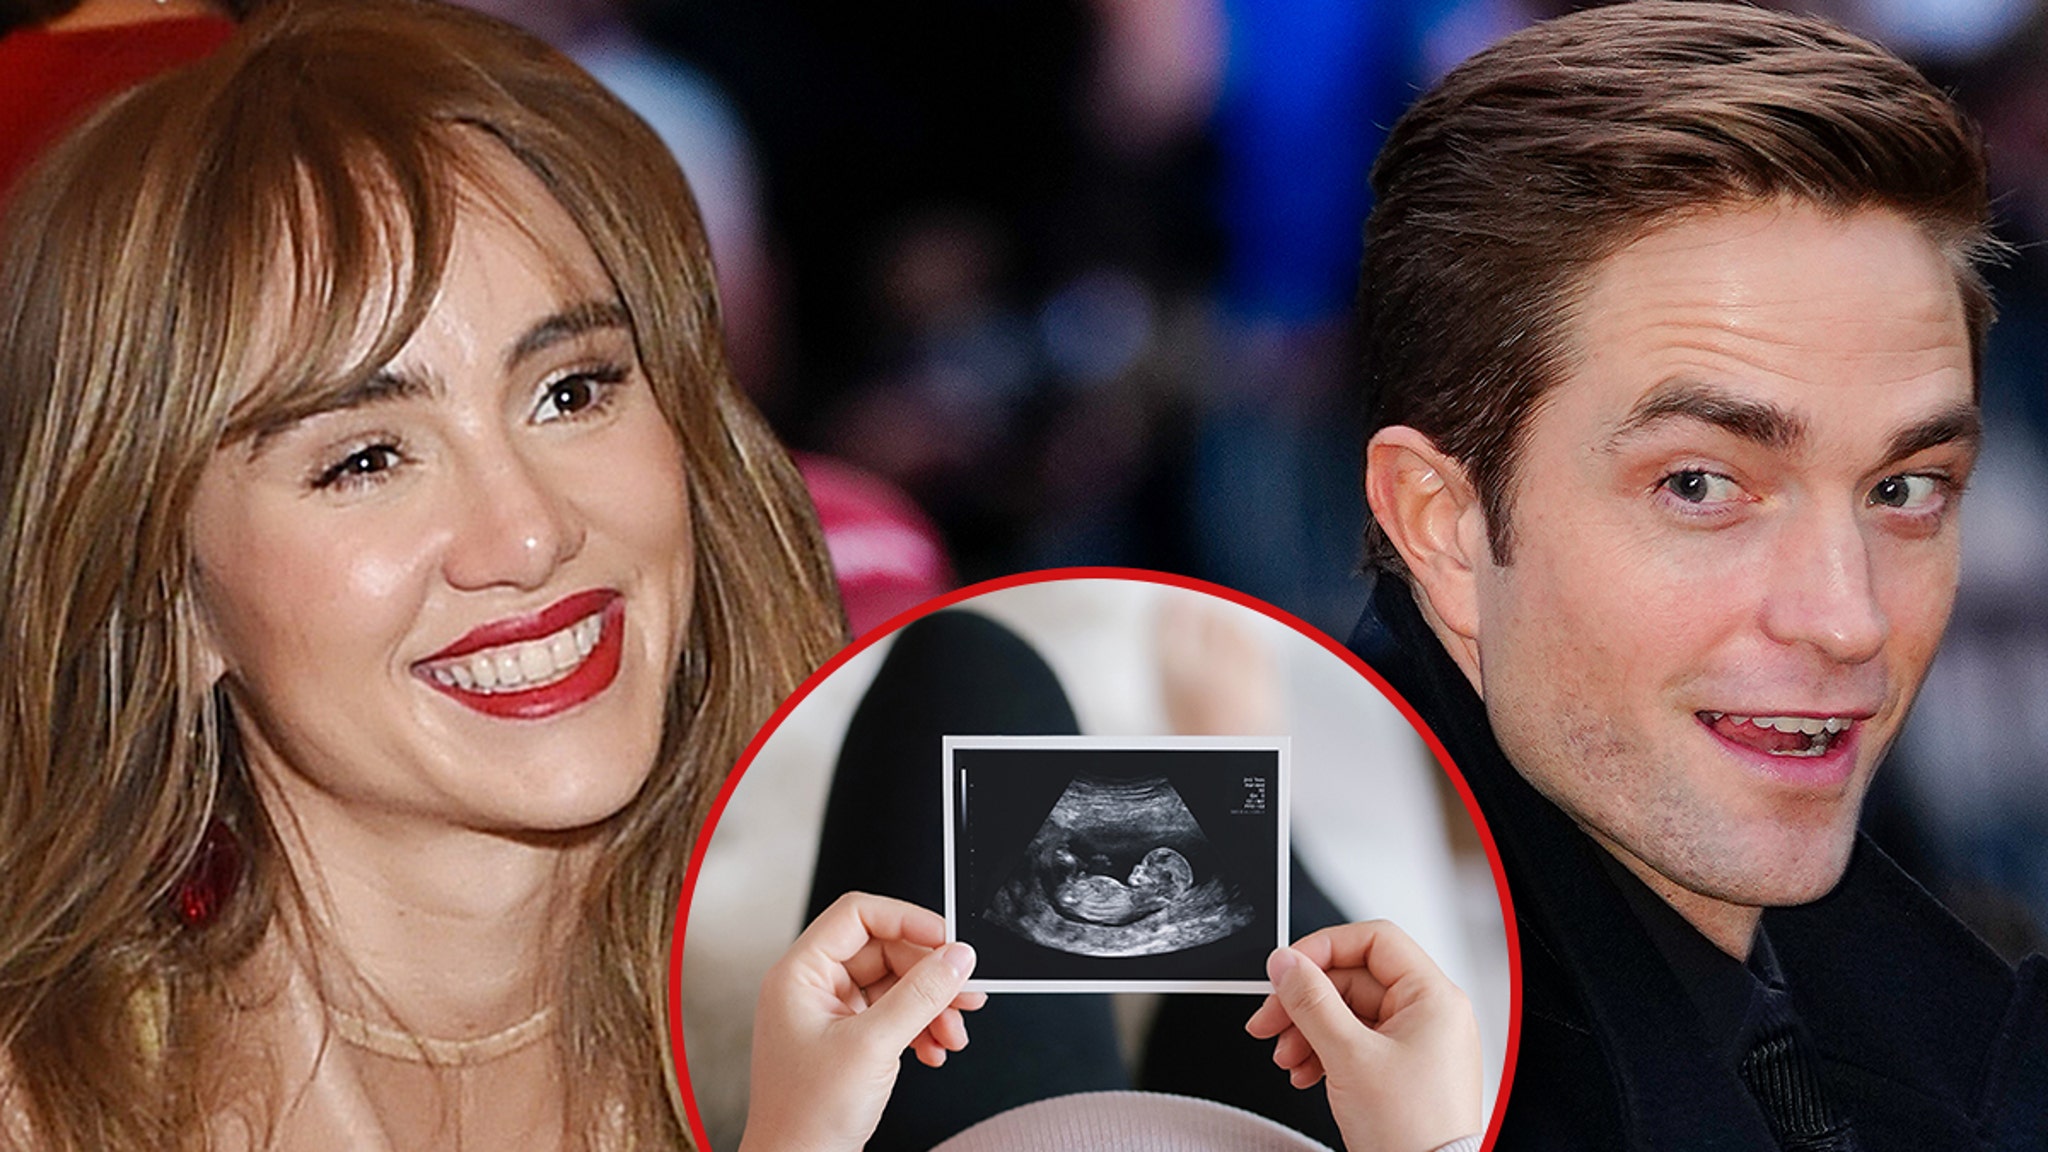 Suki Waterhouse Pregnant, Anticipating Baby with Robert Pattinson